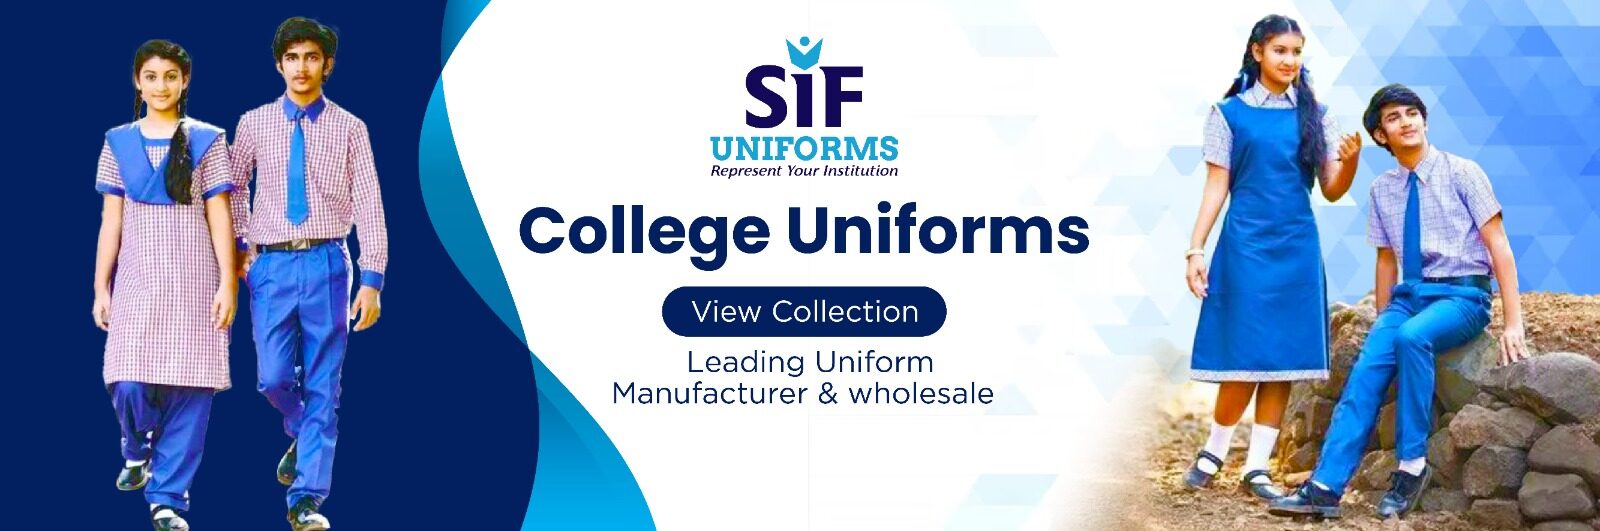 SIF_uniforms